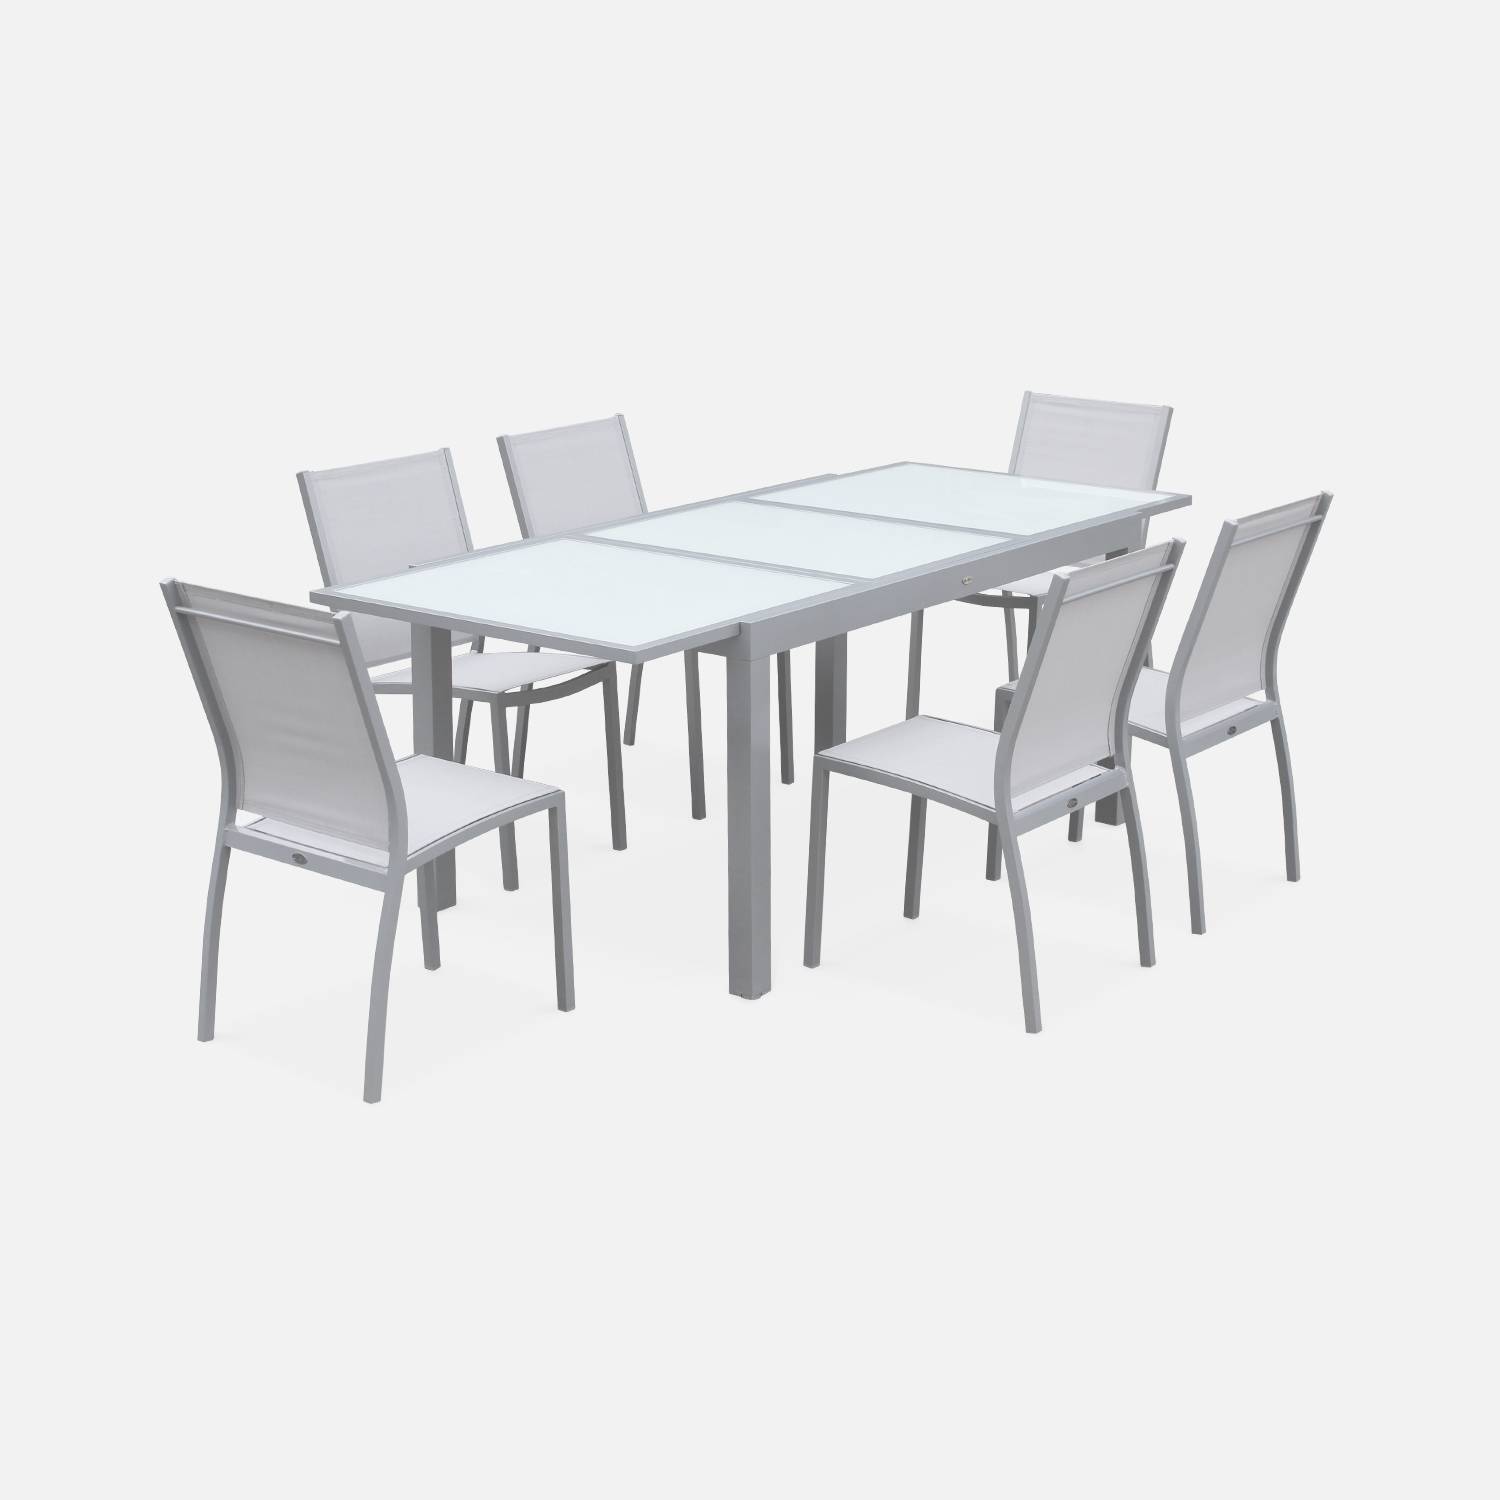 Set da pranzo da giardino alluminio allungabile 6 sedute fino 210cm | sweeek